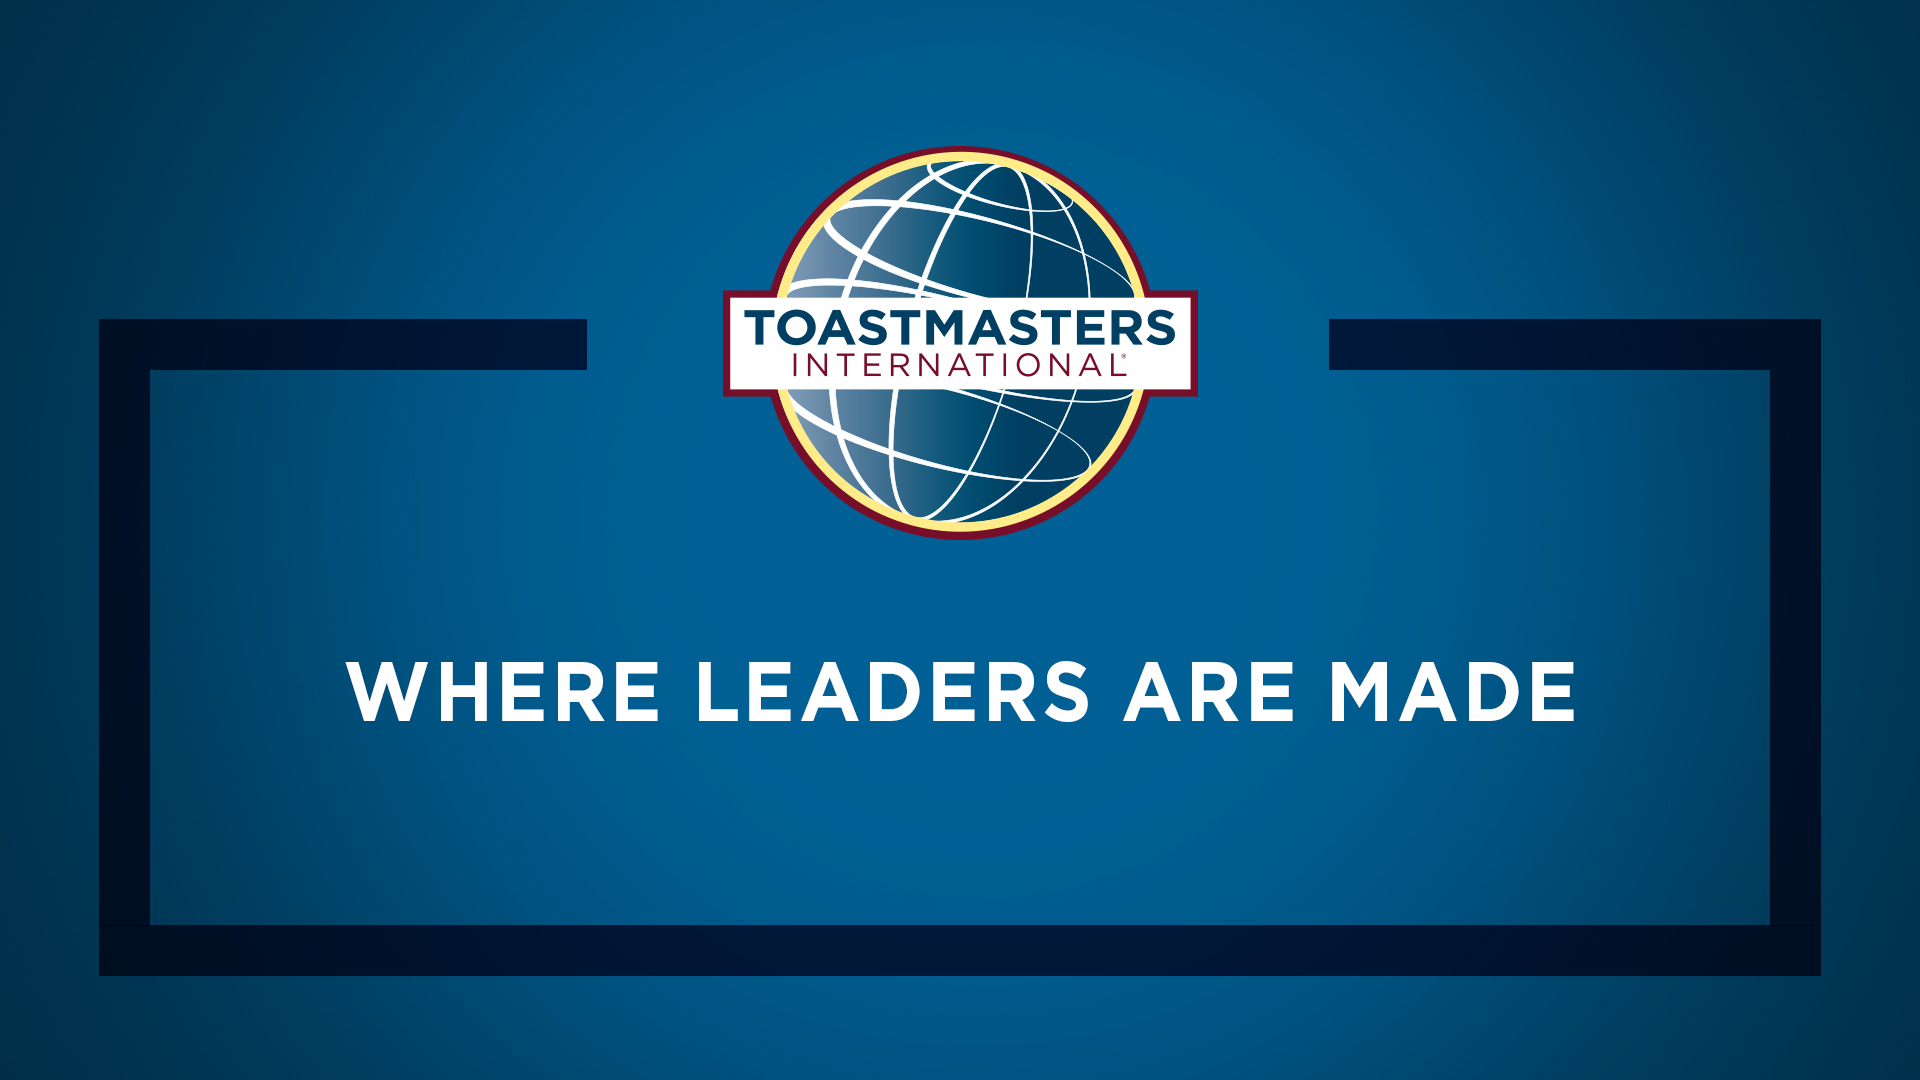 Toastmasters International Logo And Design Elements